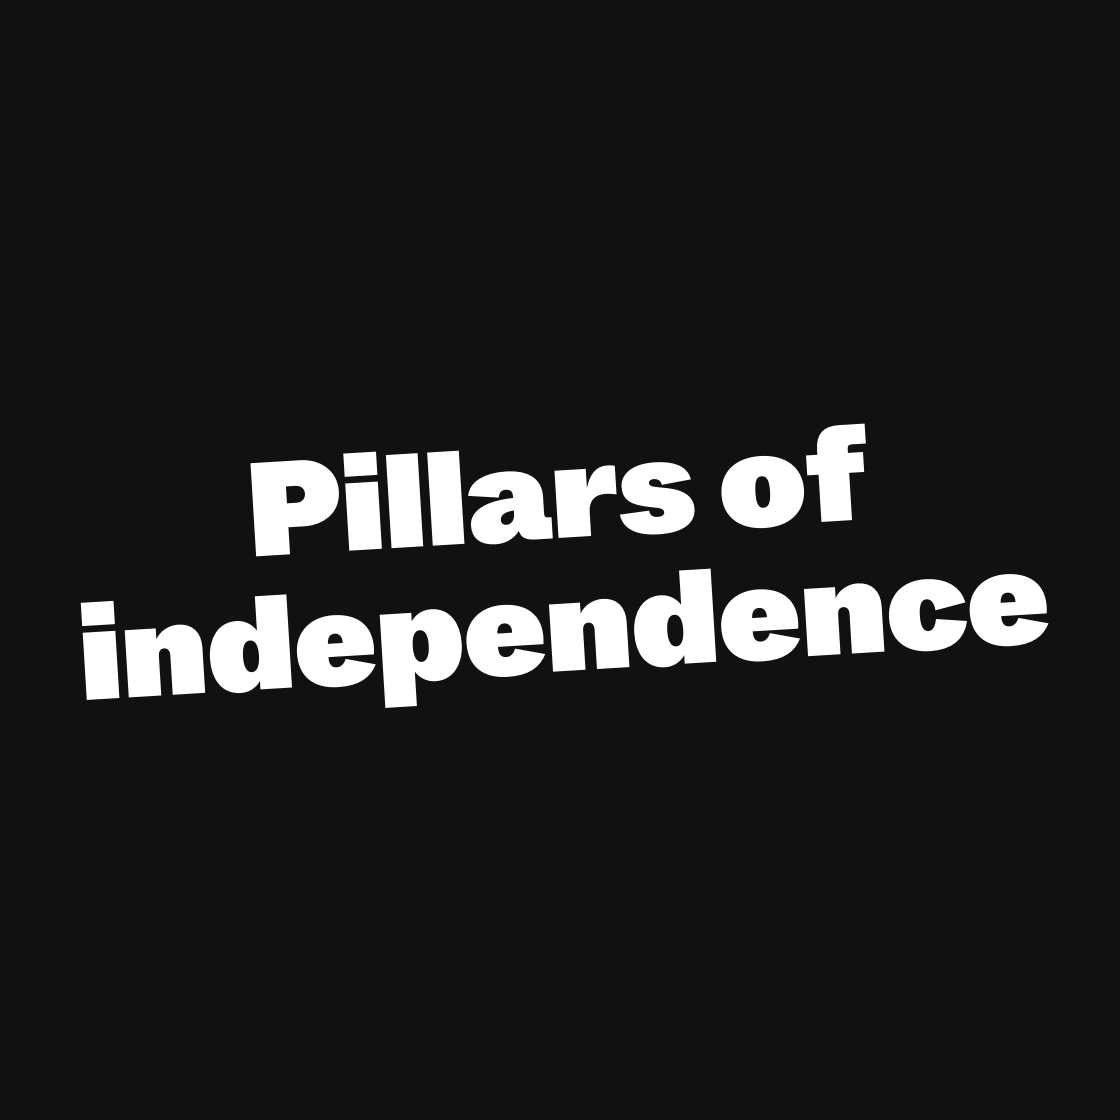 Pillars of independence